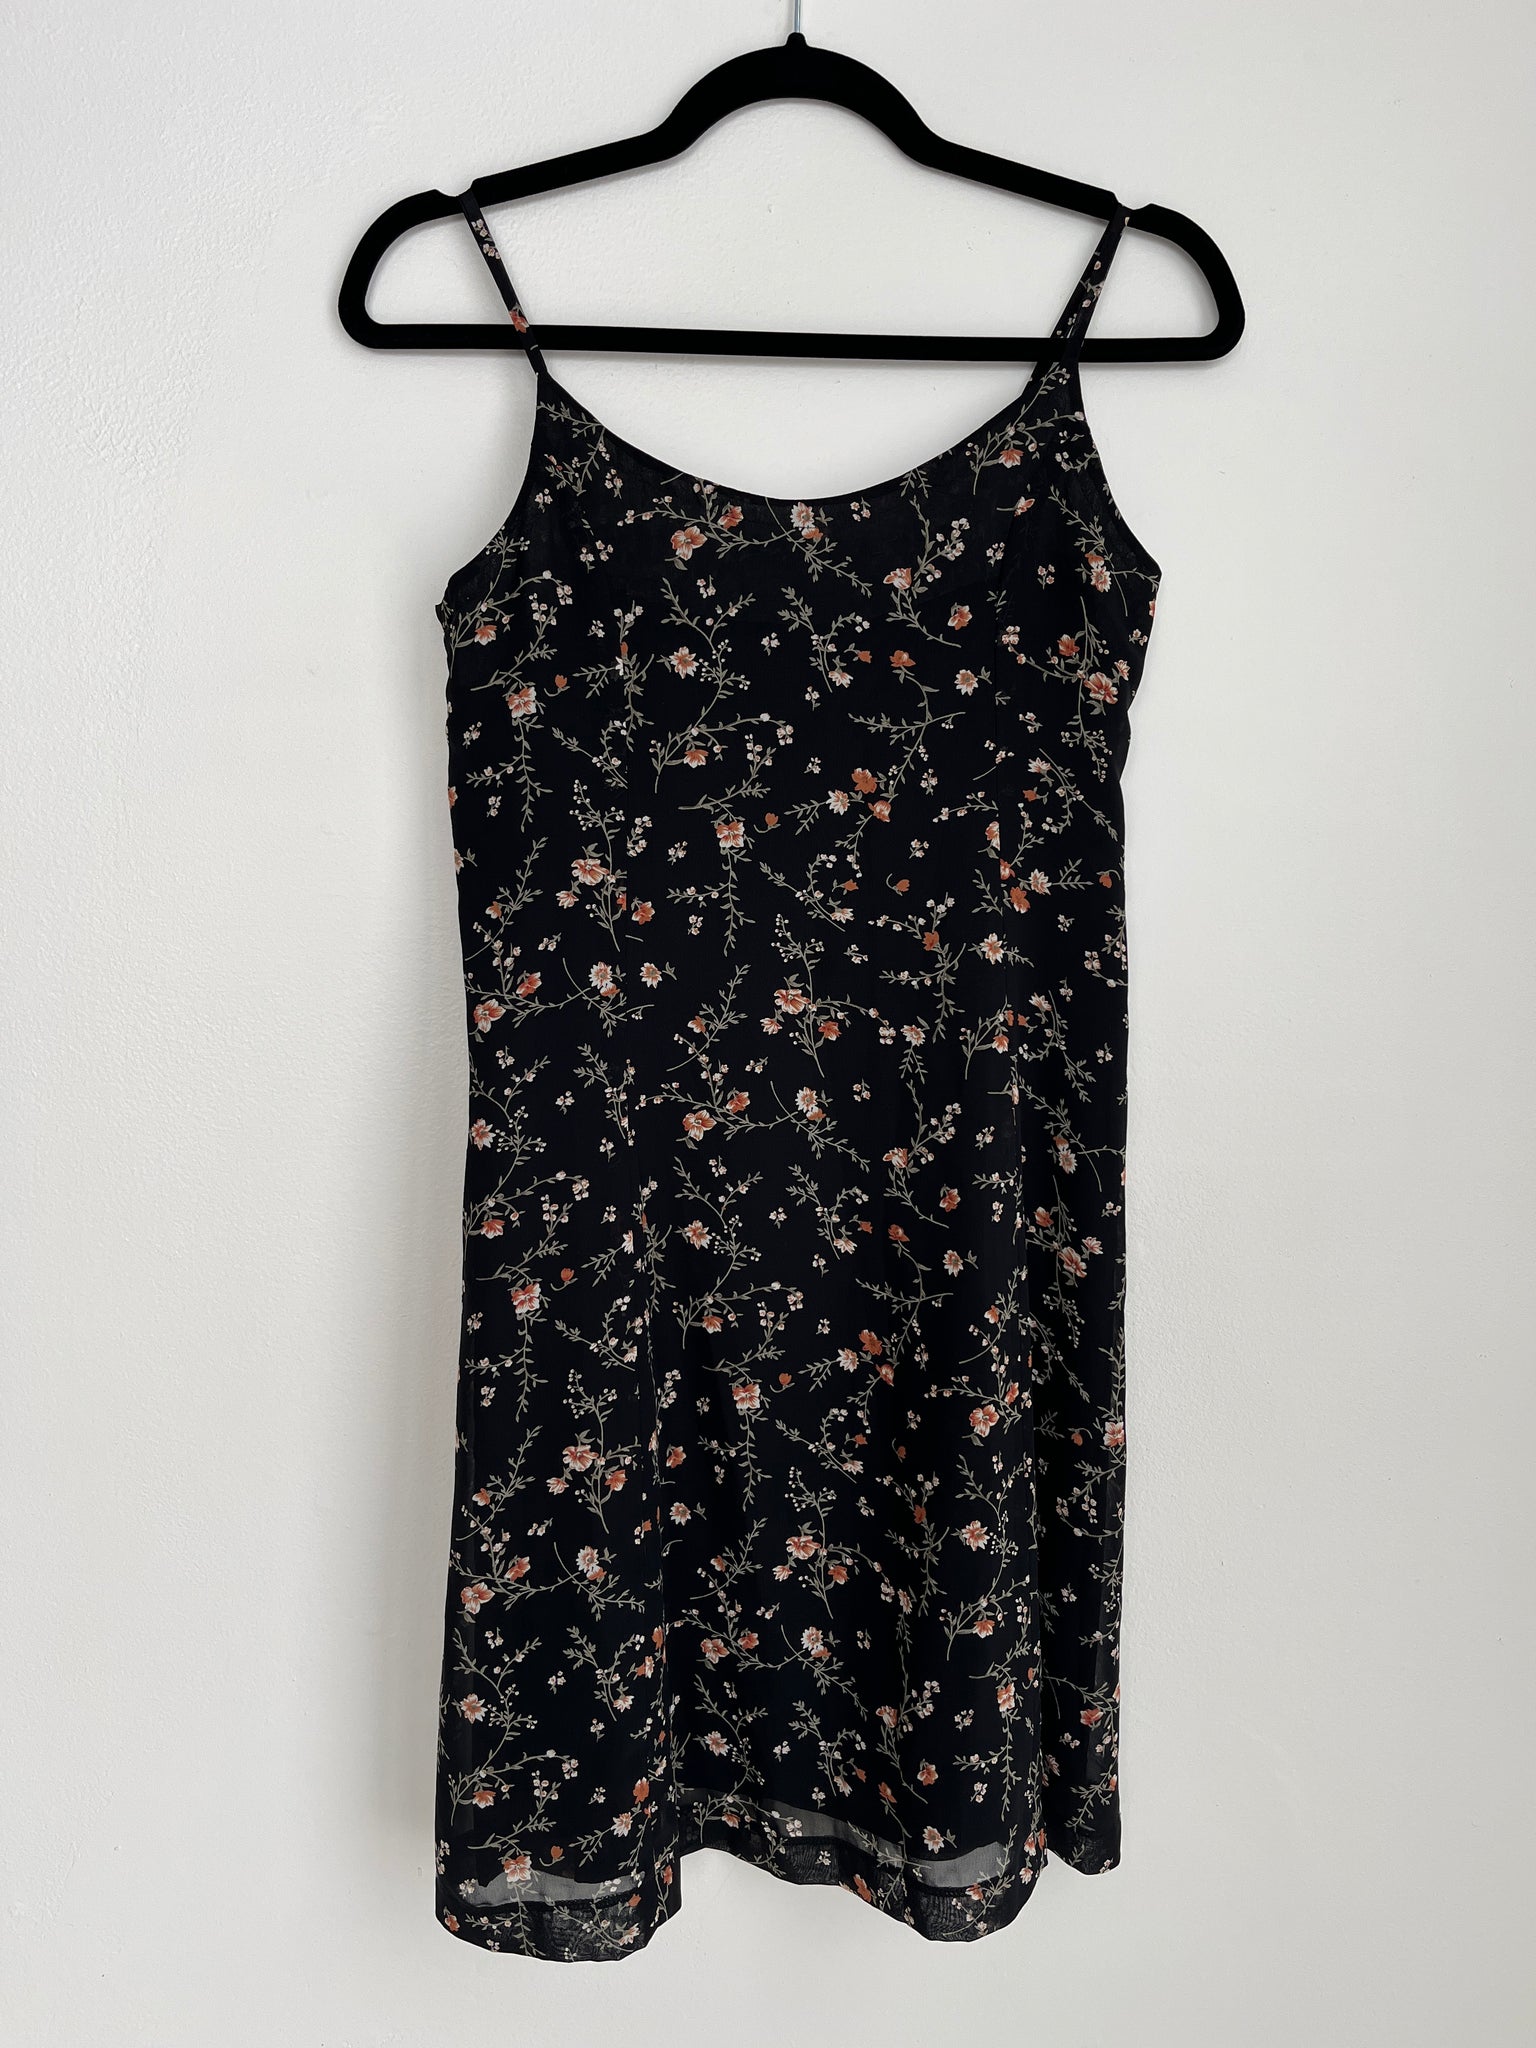 1990s DRESS-KaFung slip style black floral print